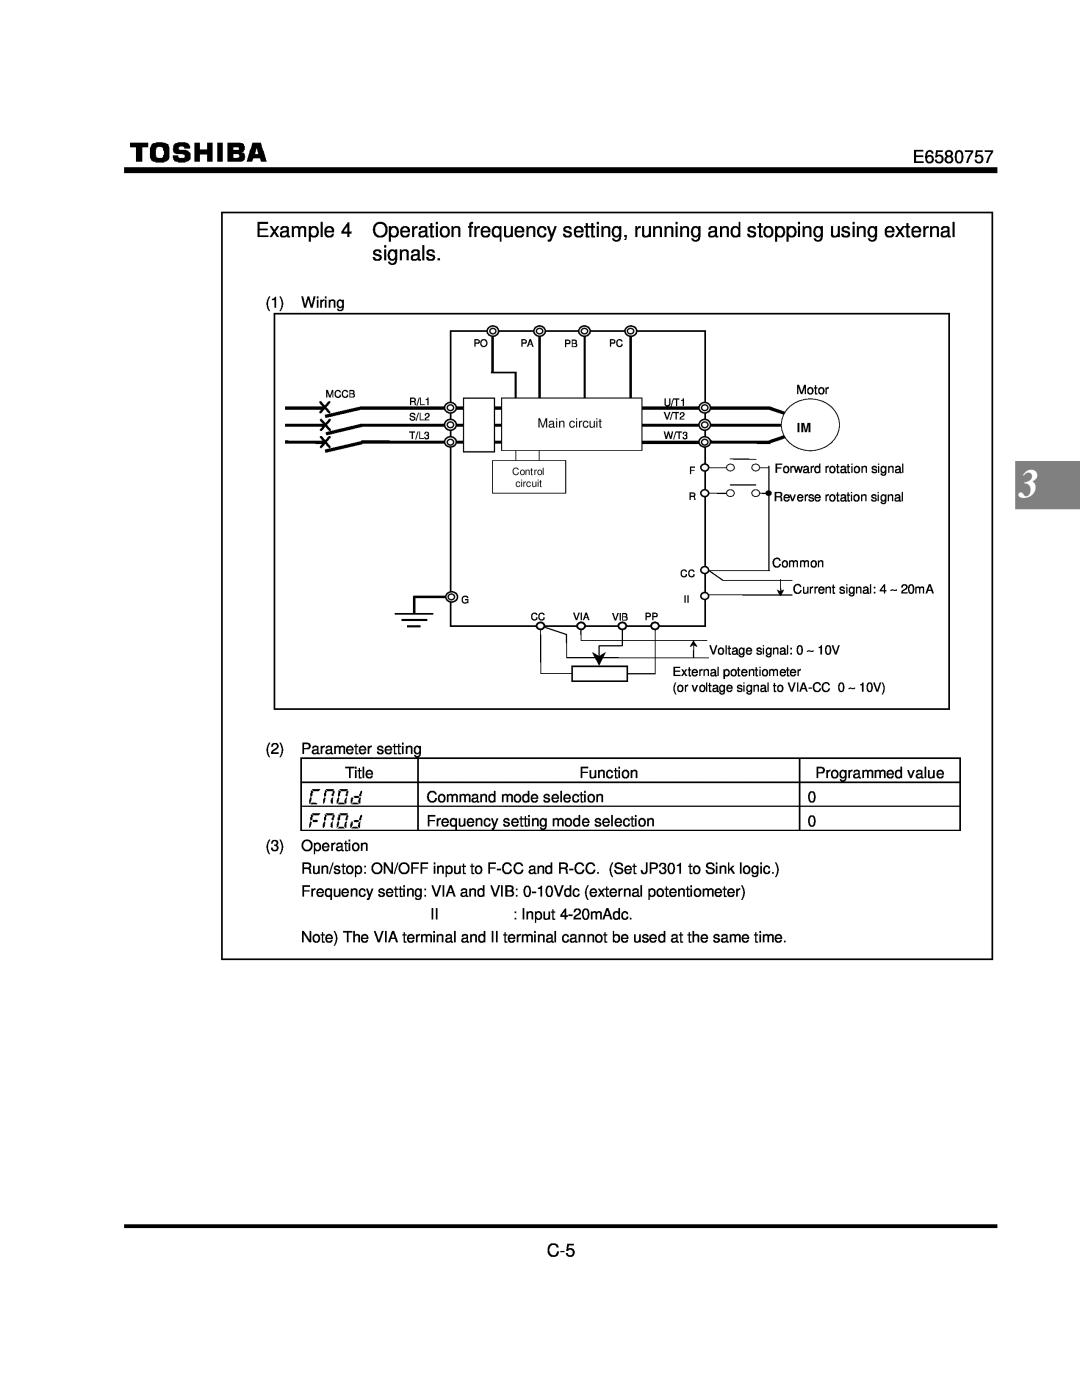 Toshiba VF-S9 manual Main circuit, Current signal 4 ∼, 20mA, or voltage signal to VIA-CC 0 ∼ 